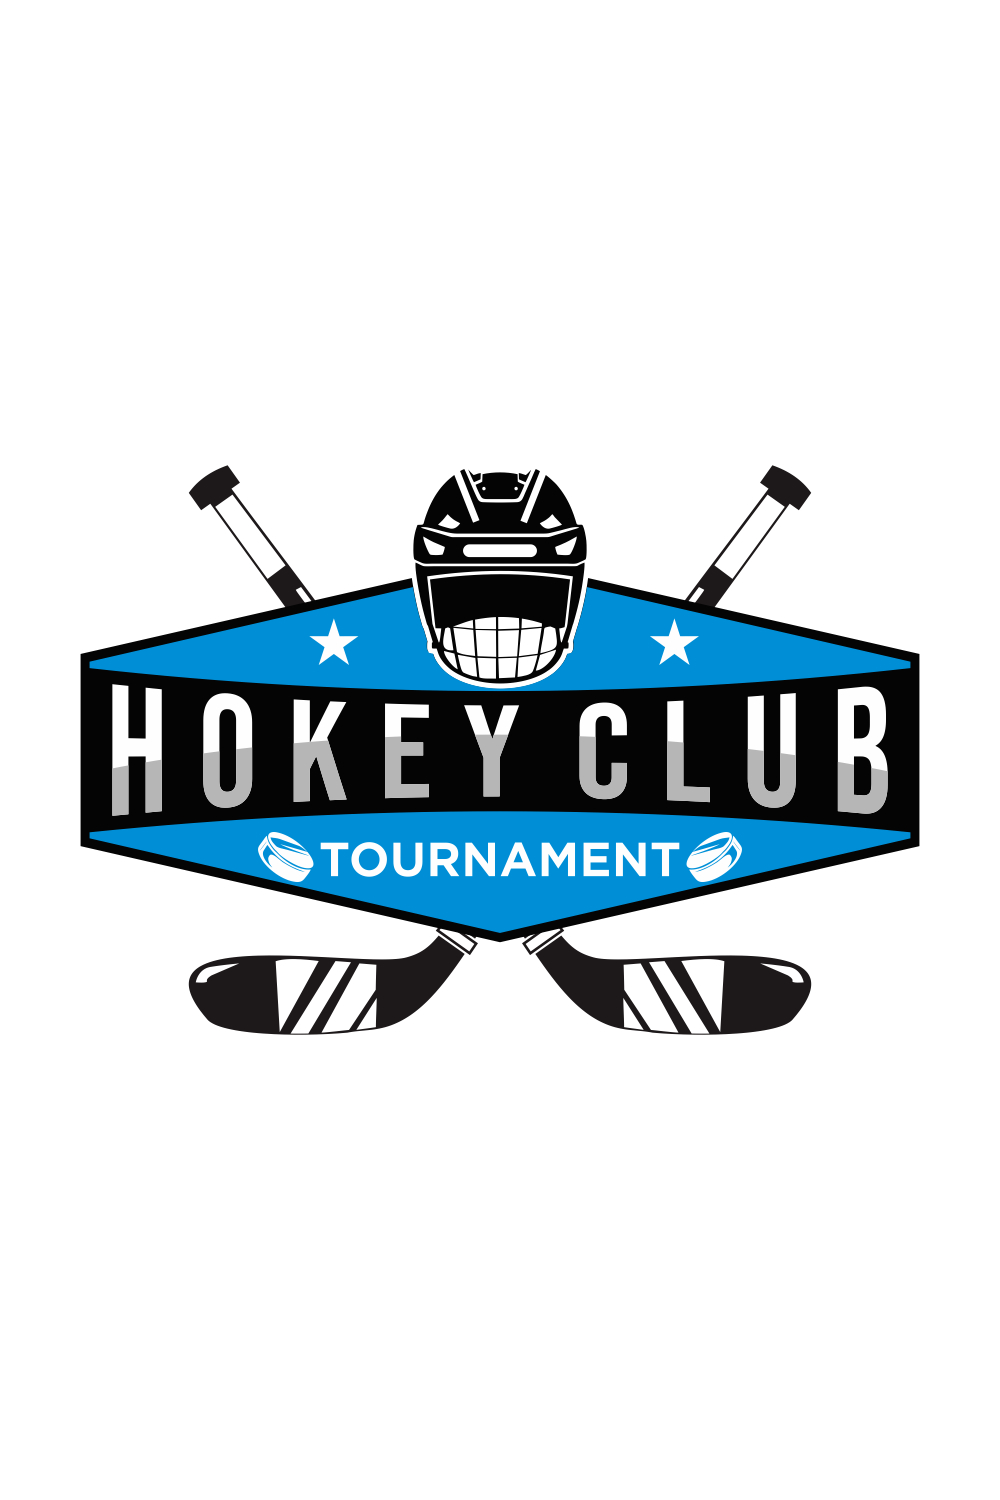 Hockey tournament sport logo template Modern vector illustration Badge design pinterest preview image.